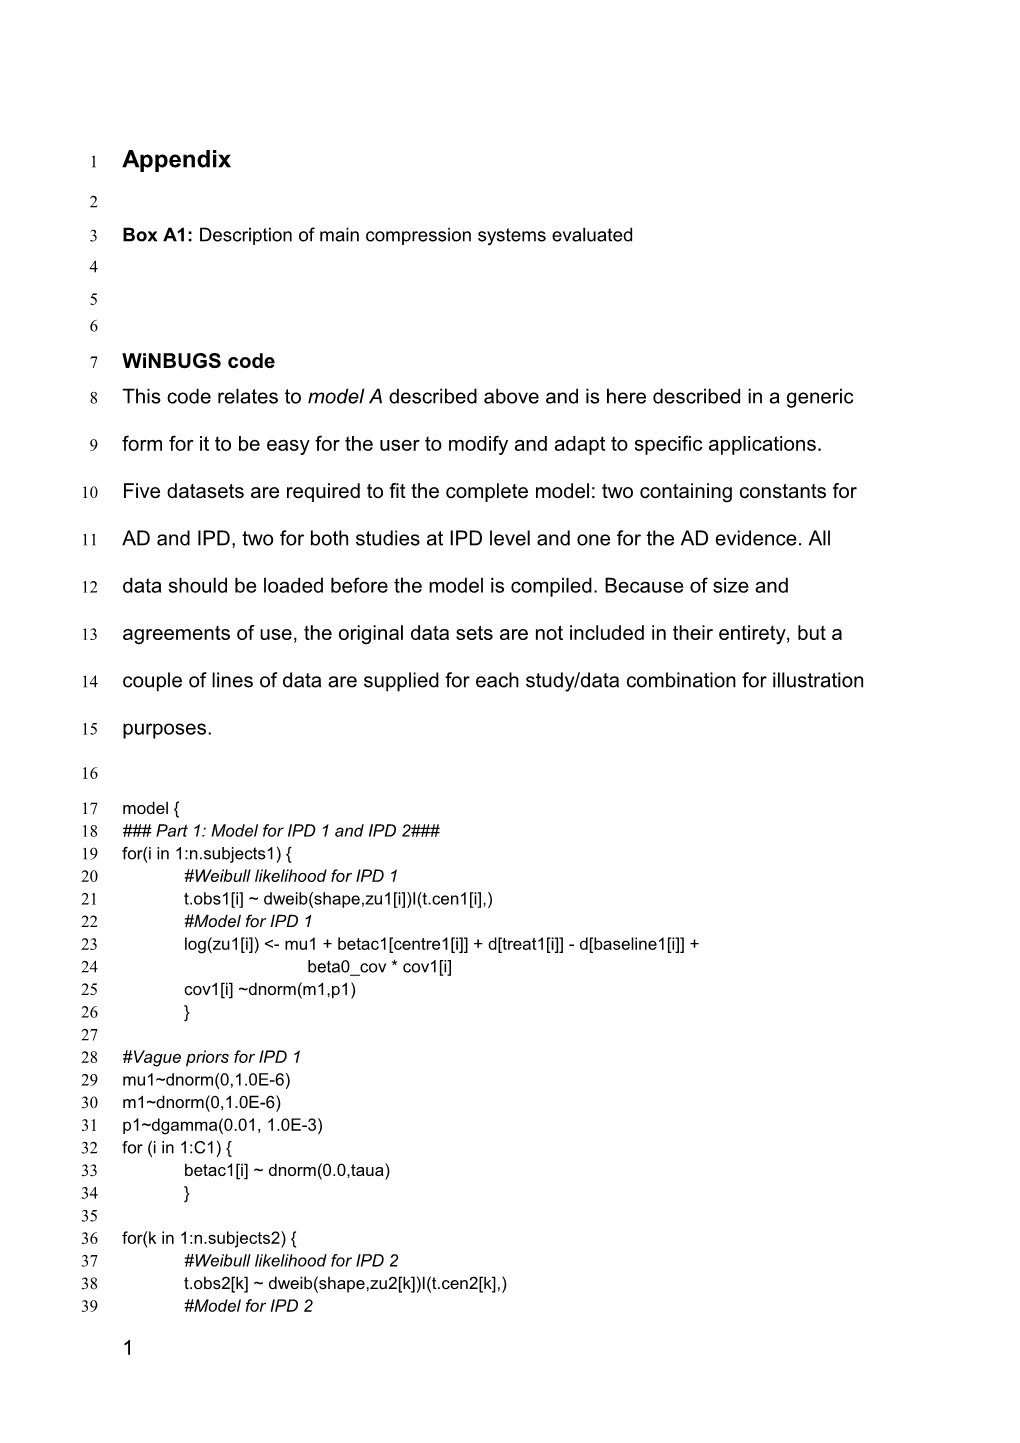 Box A1: Description of Main Compression Systems Evaluated